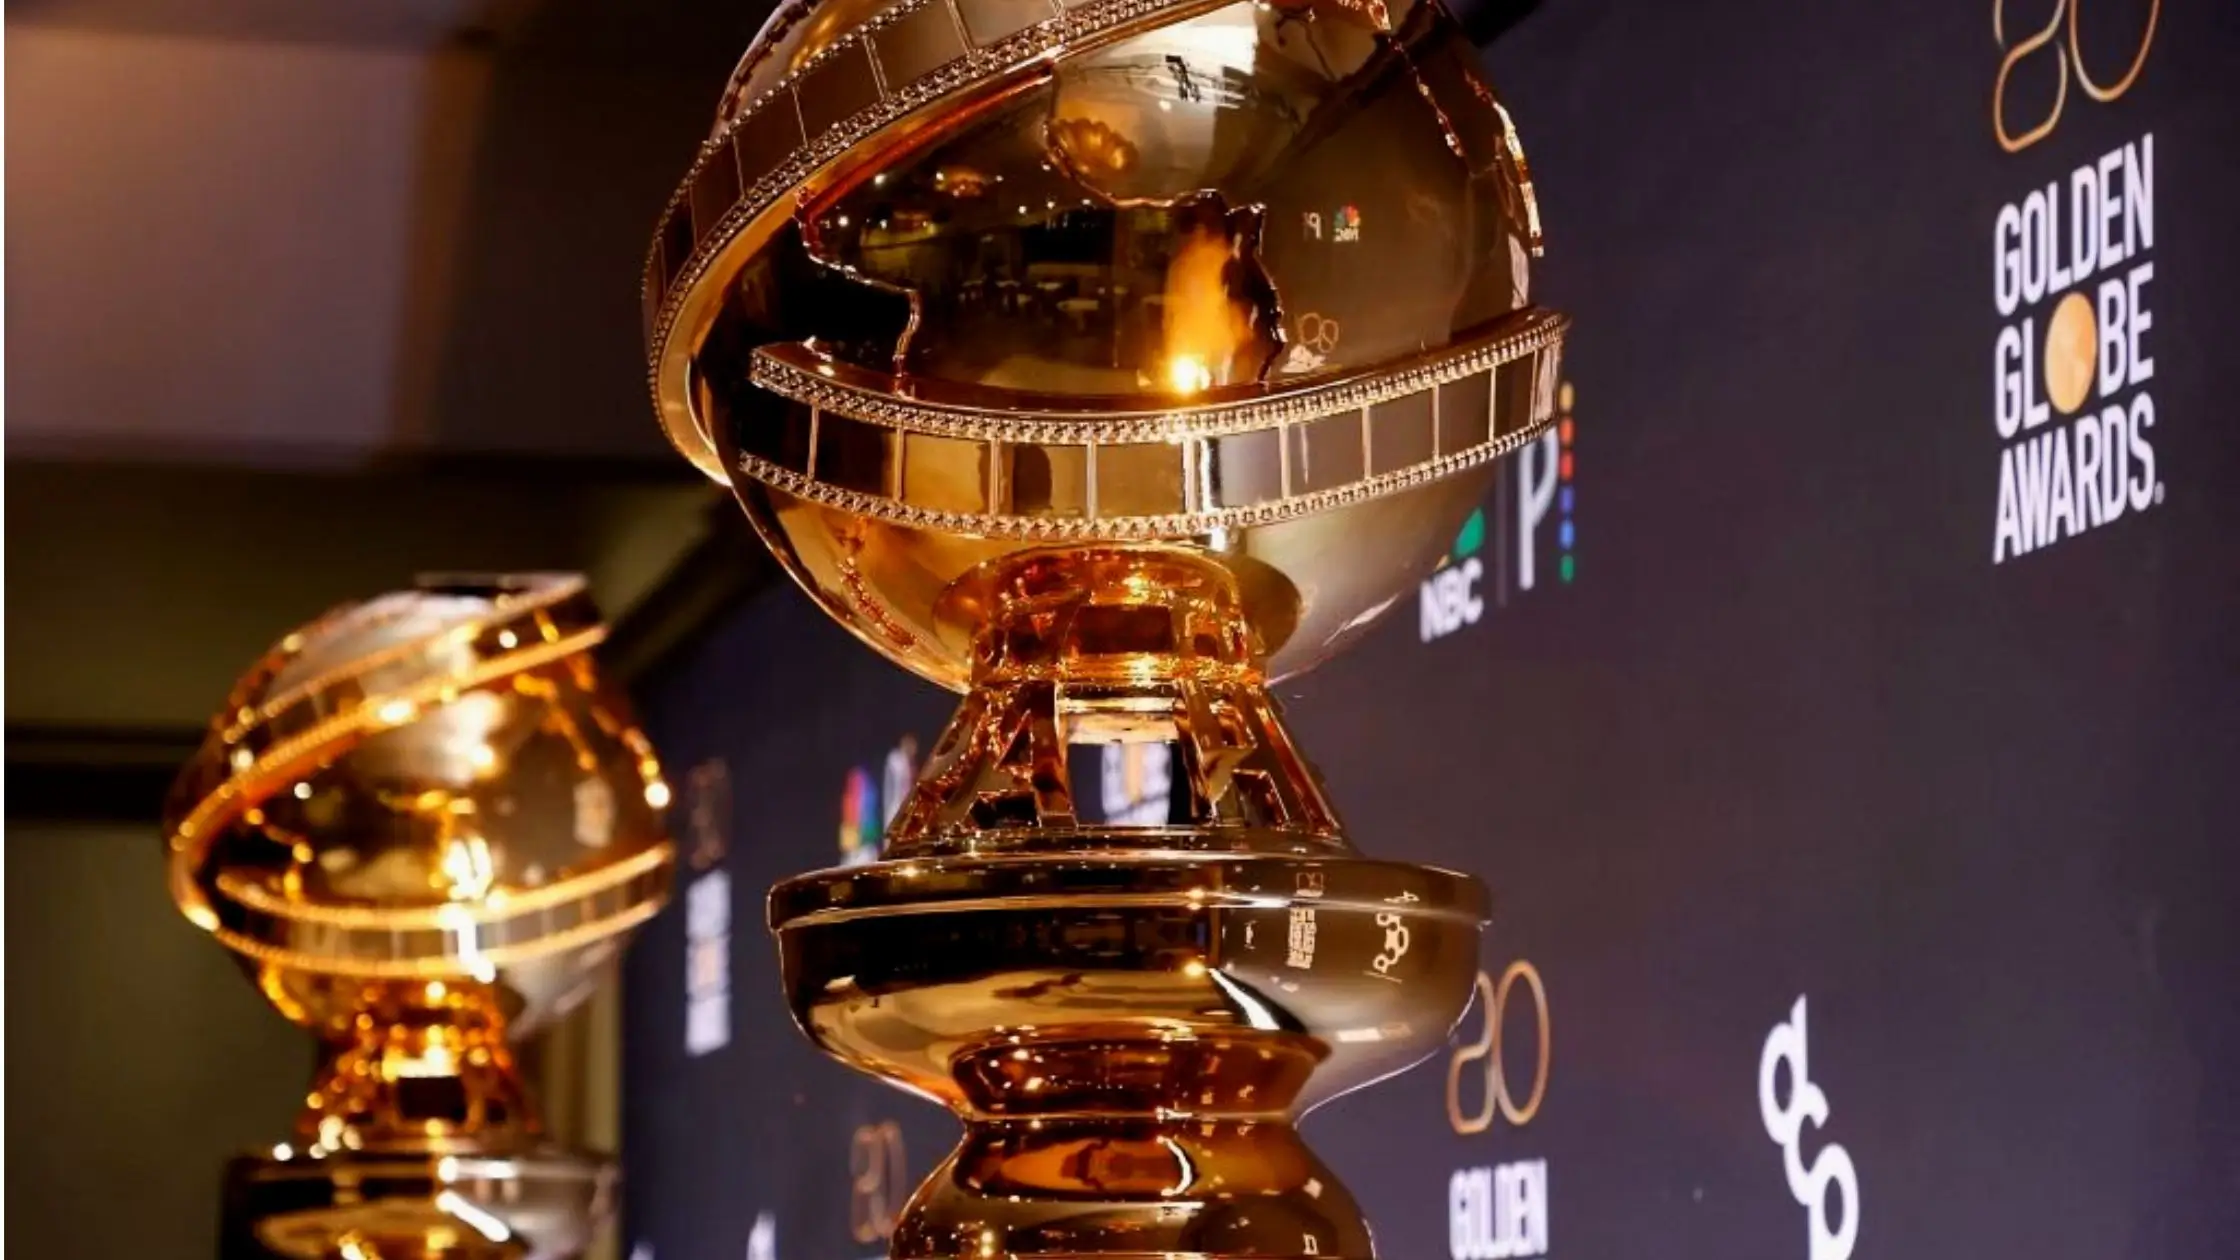 Golden Globe 2023: Live Telecast Details Of This Prestigious Awards Show